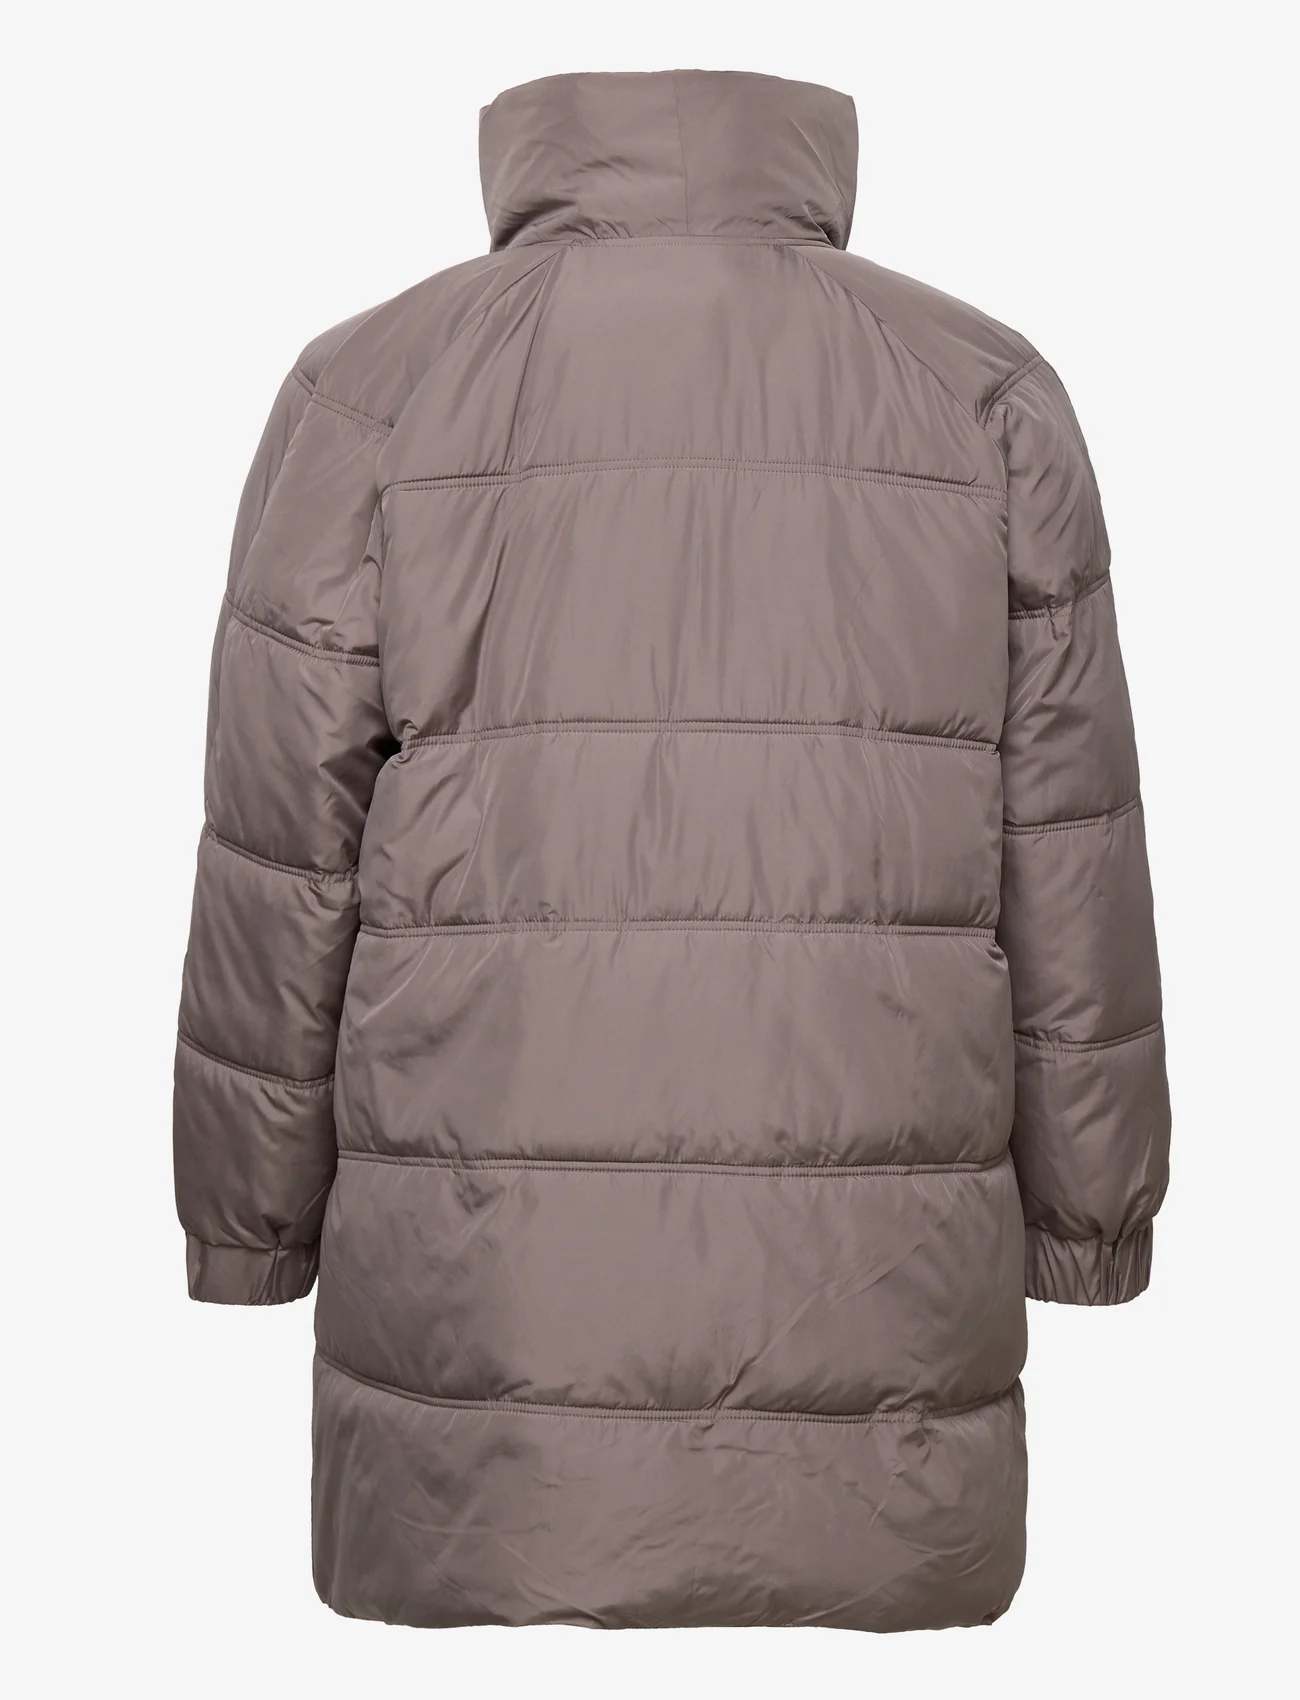 Zizzi - MSHANGHAI, L/S, COAT - winter jackets - brown - 1